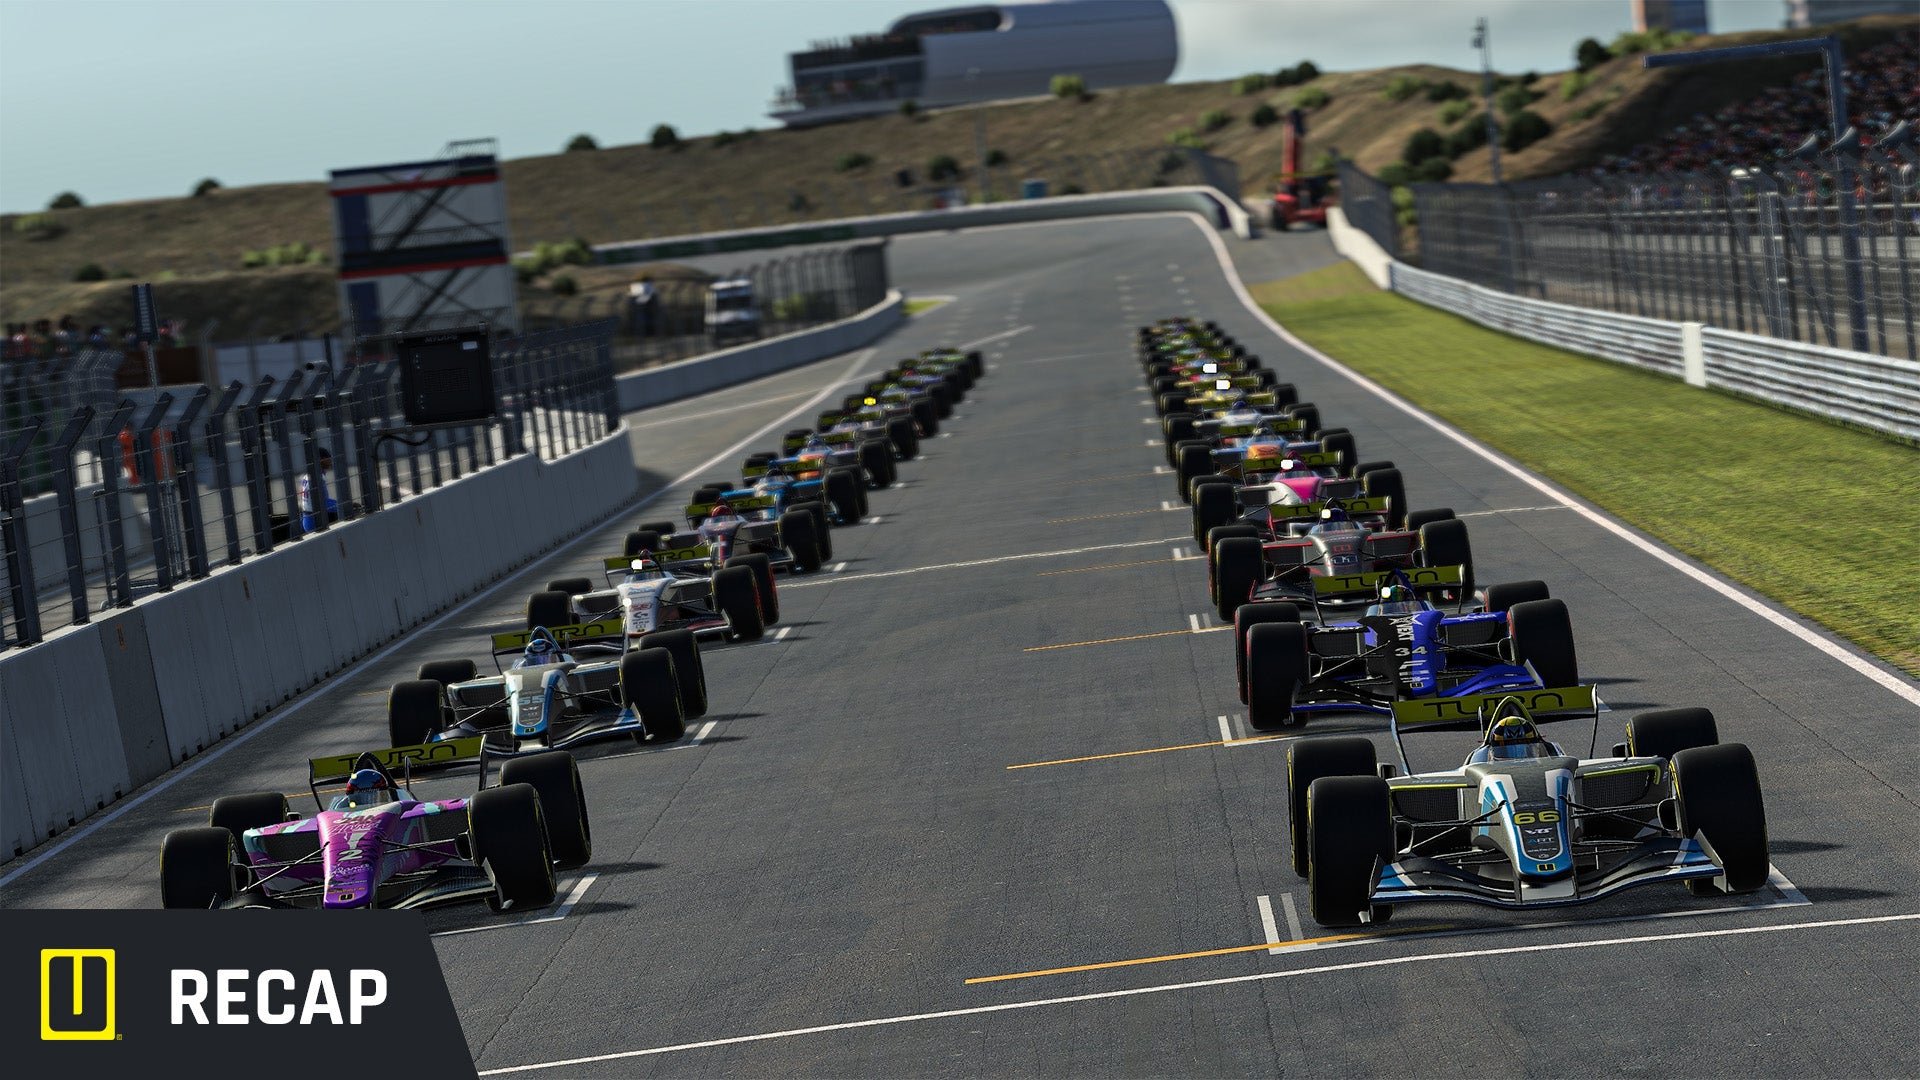 Grand Prix Turn Racing iRacing Series Race 5 Recap